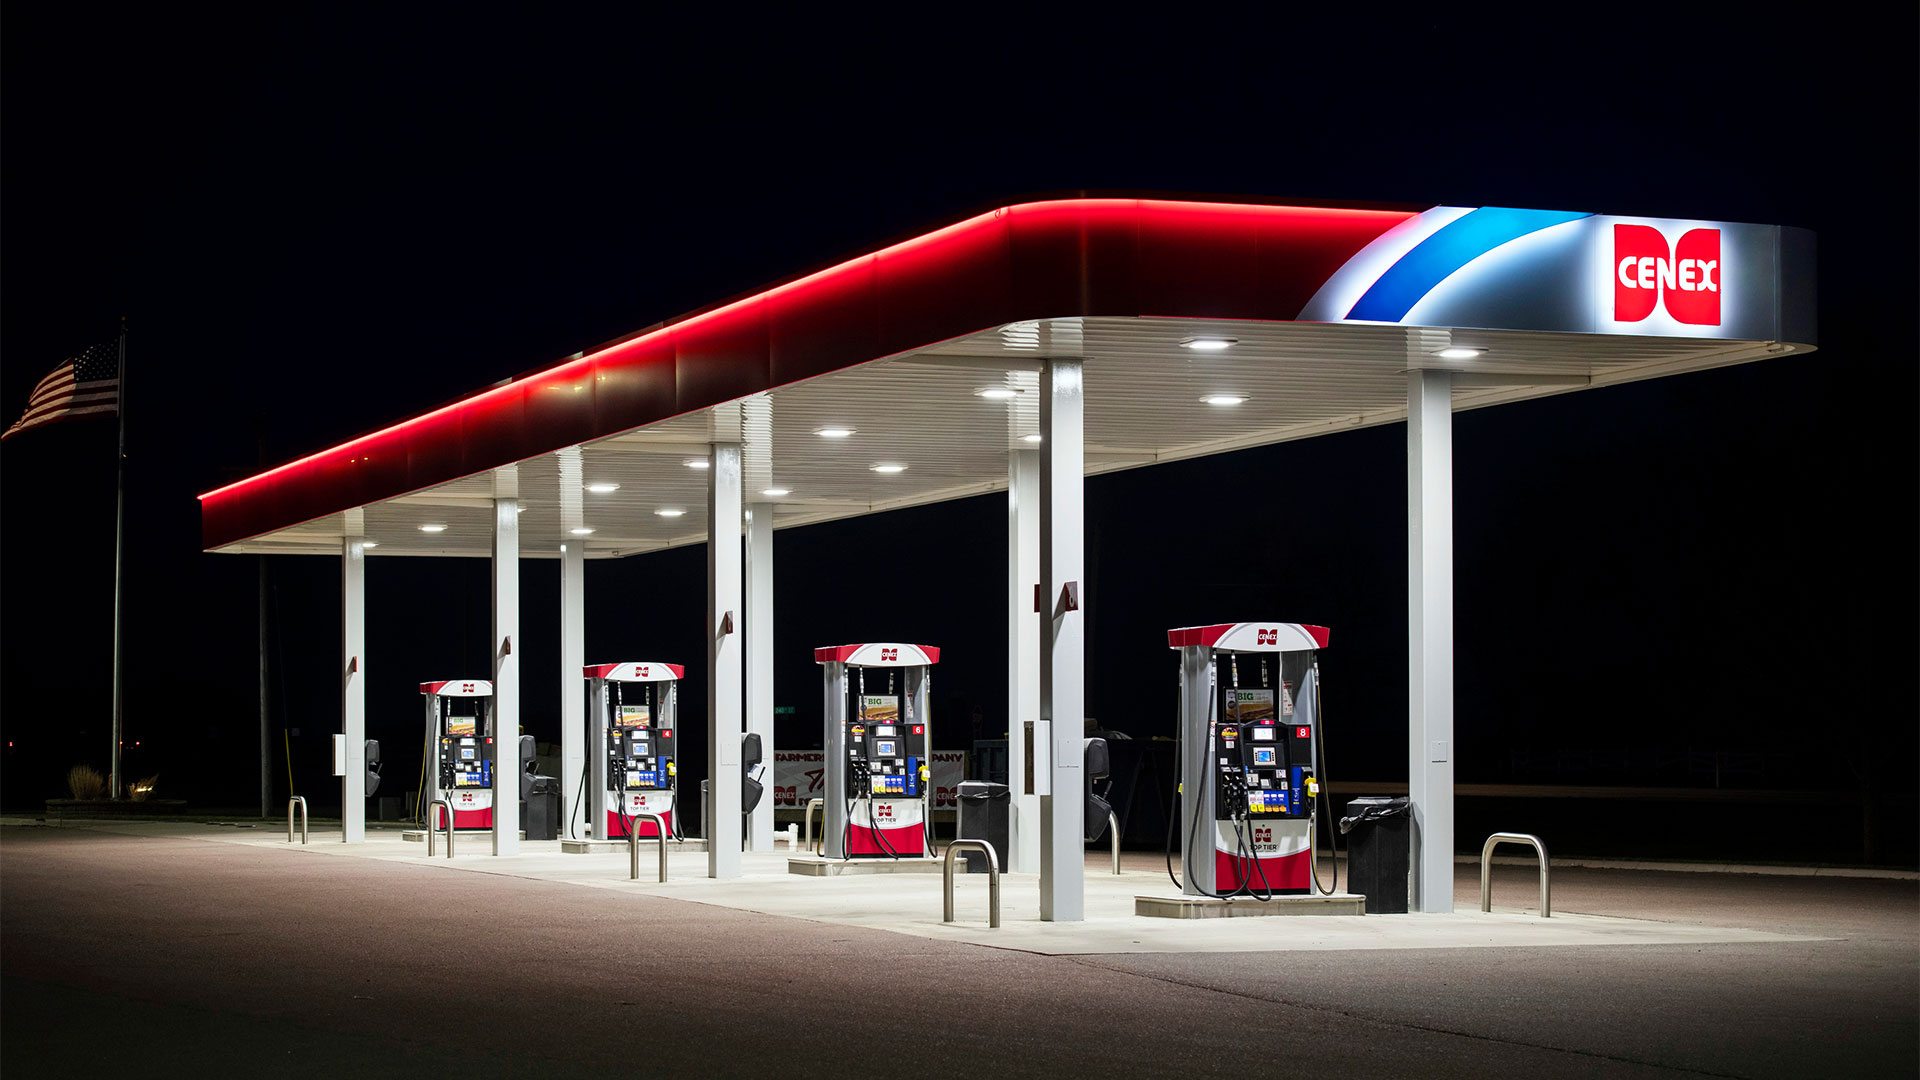 Cenex gas station at night halo lit